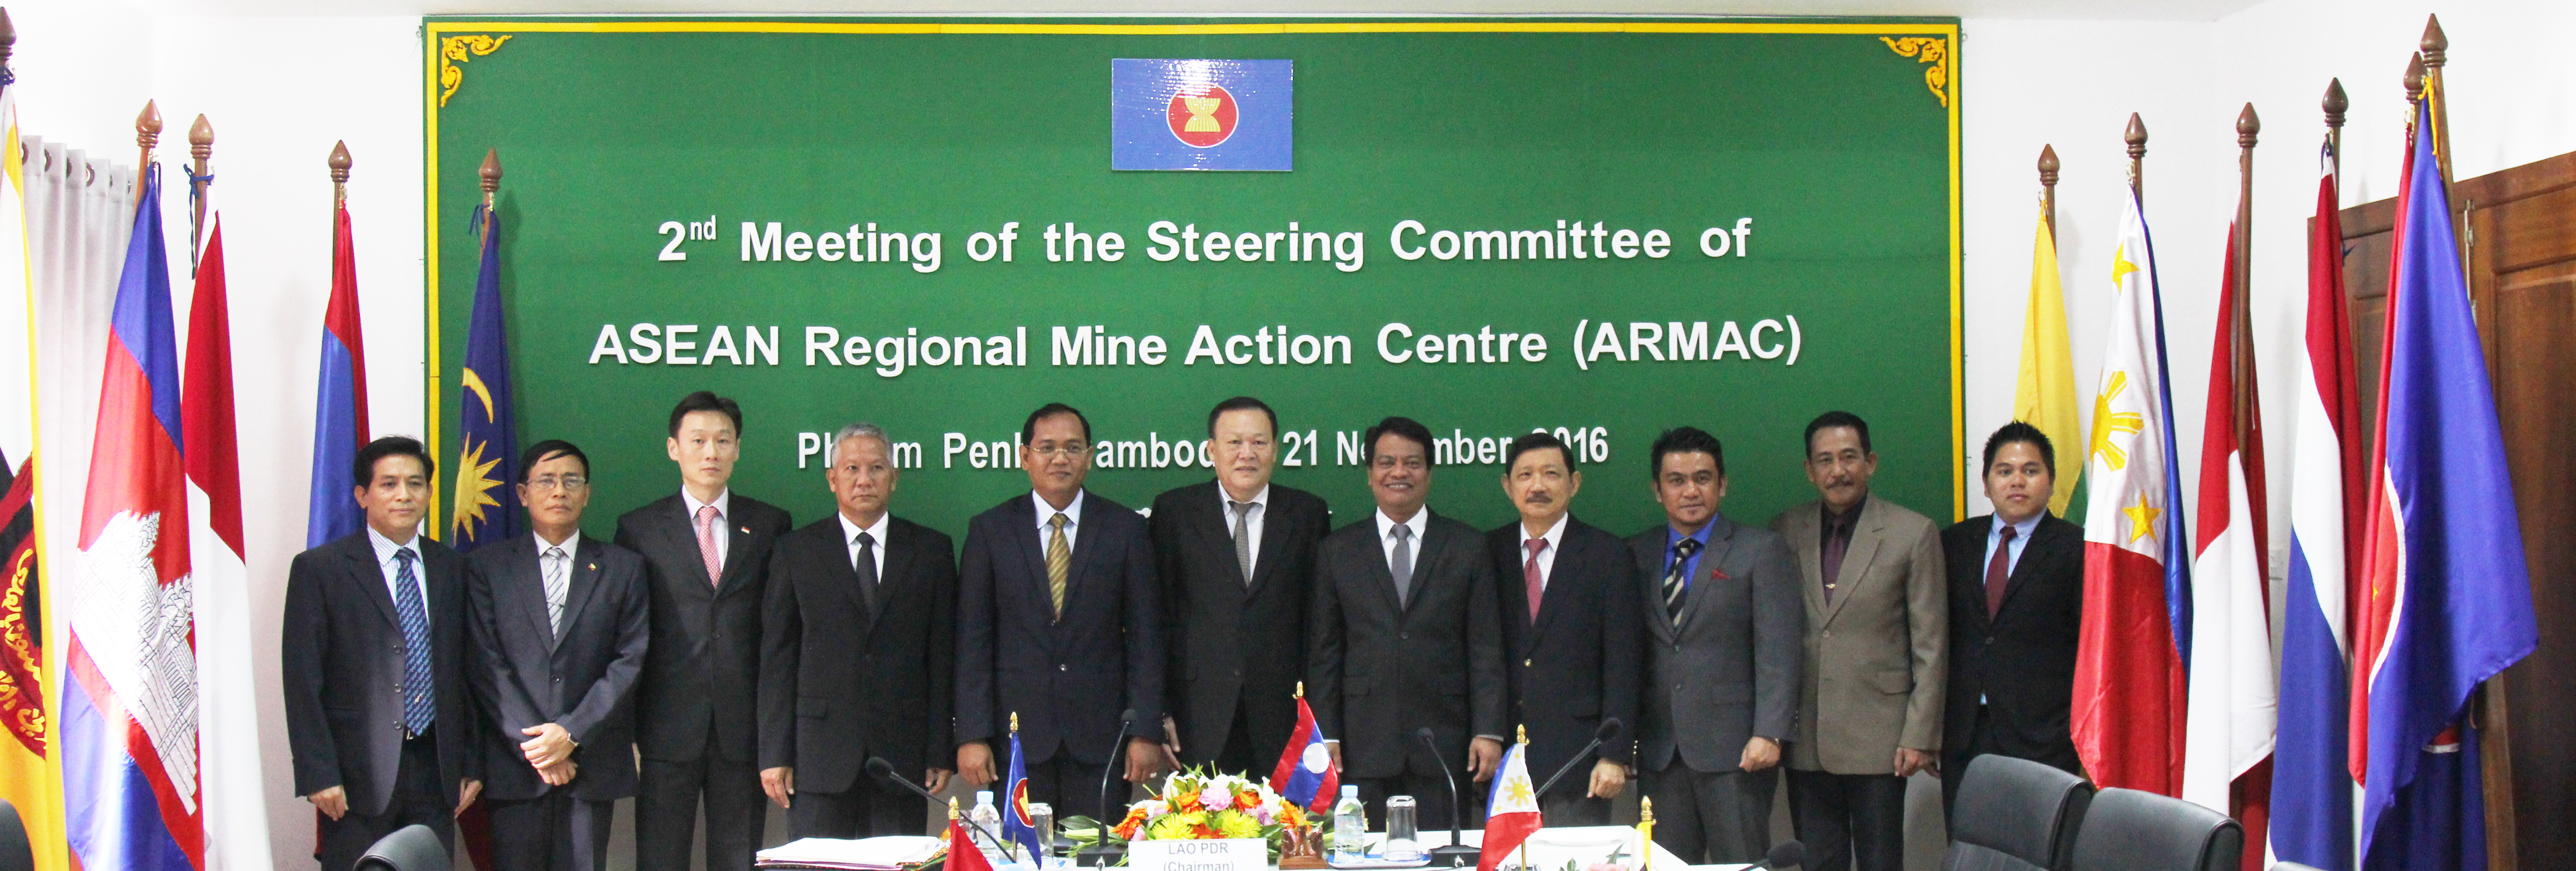 Photo courtesy of ASEAN secretariat